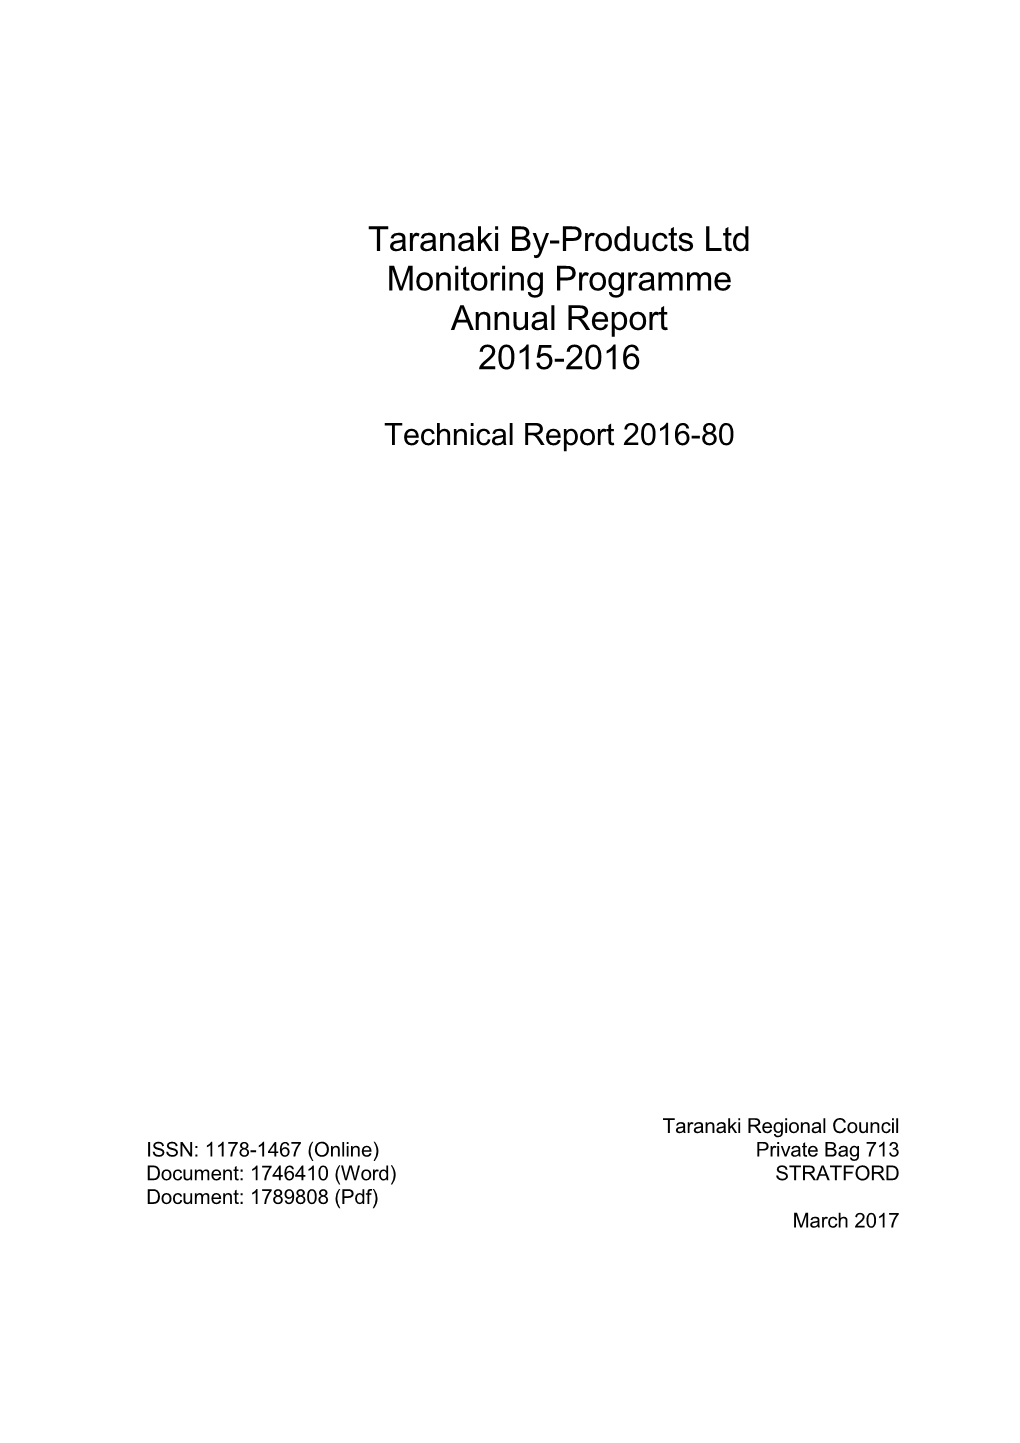 Taranaki By-Products Ltd Consent Monitoring Report